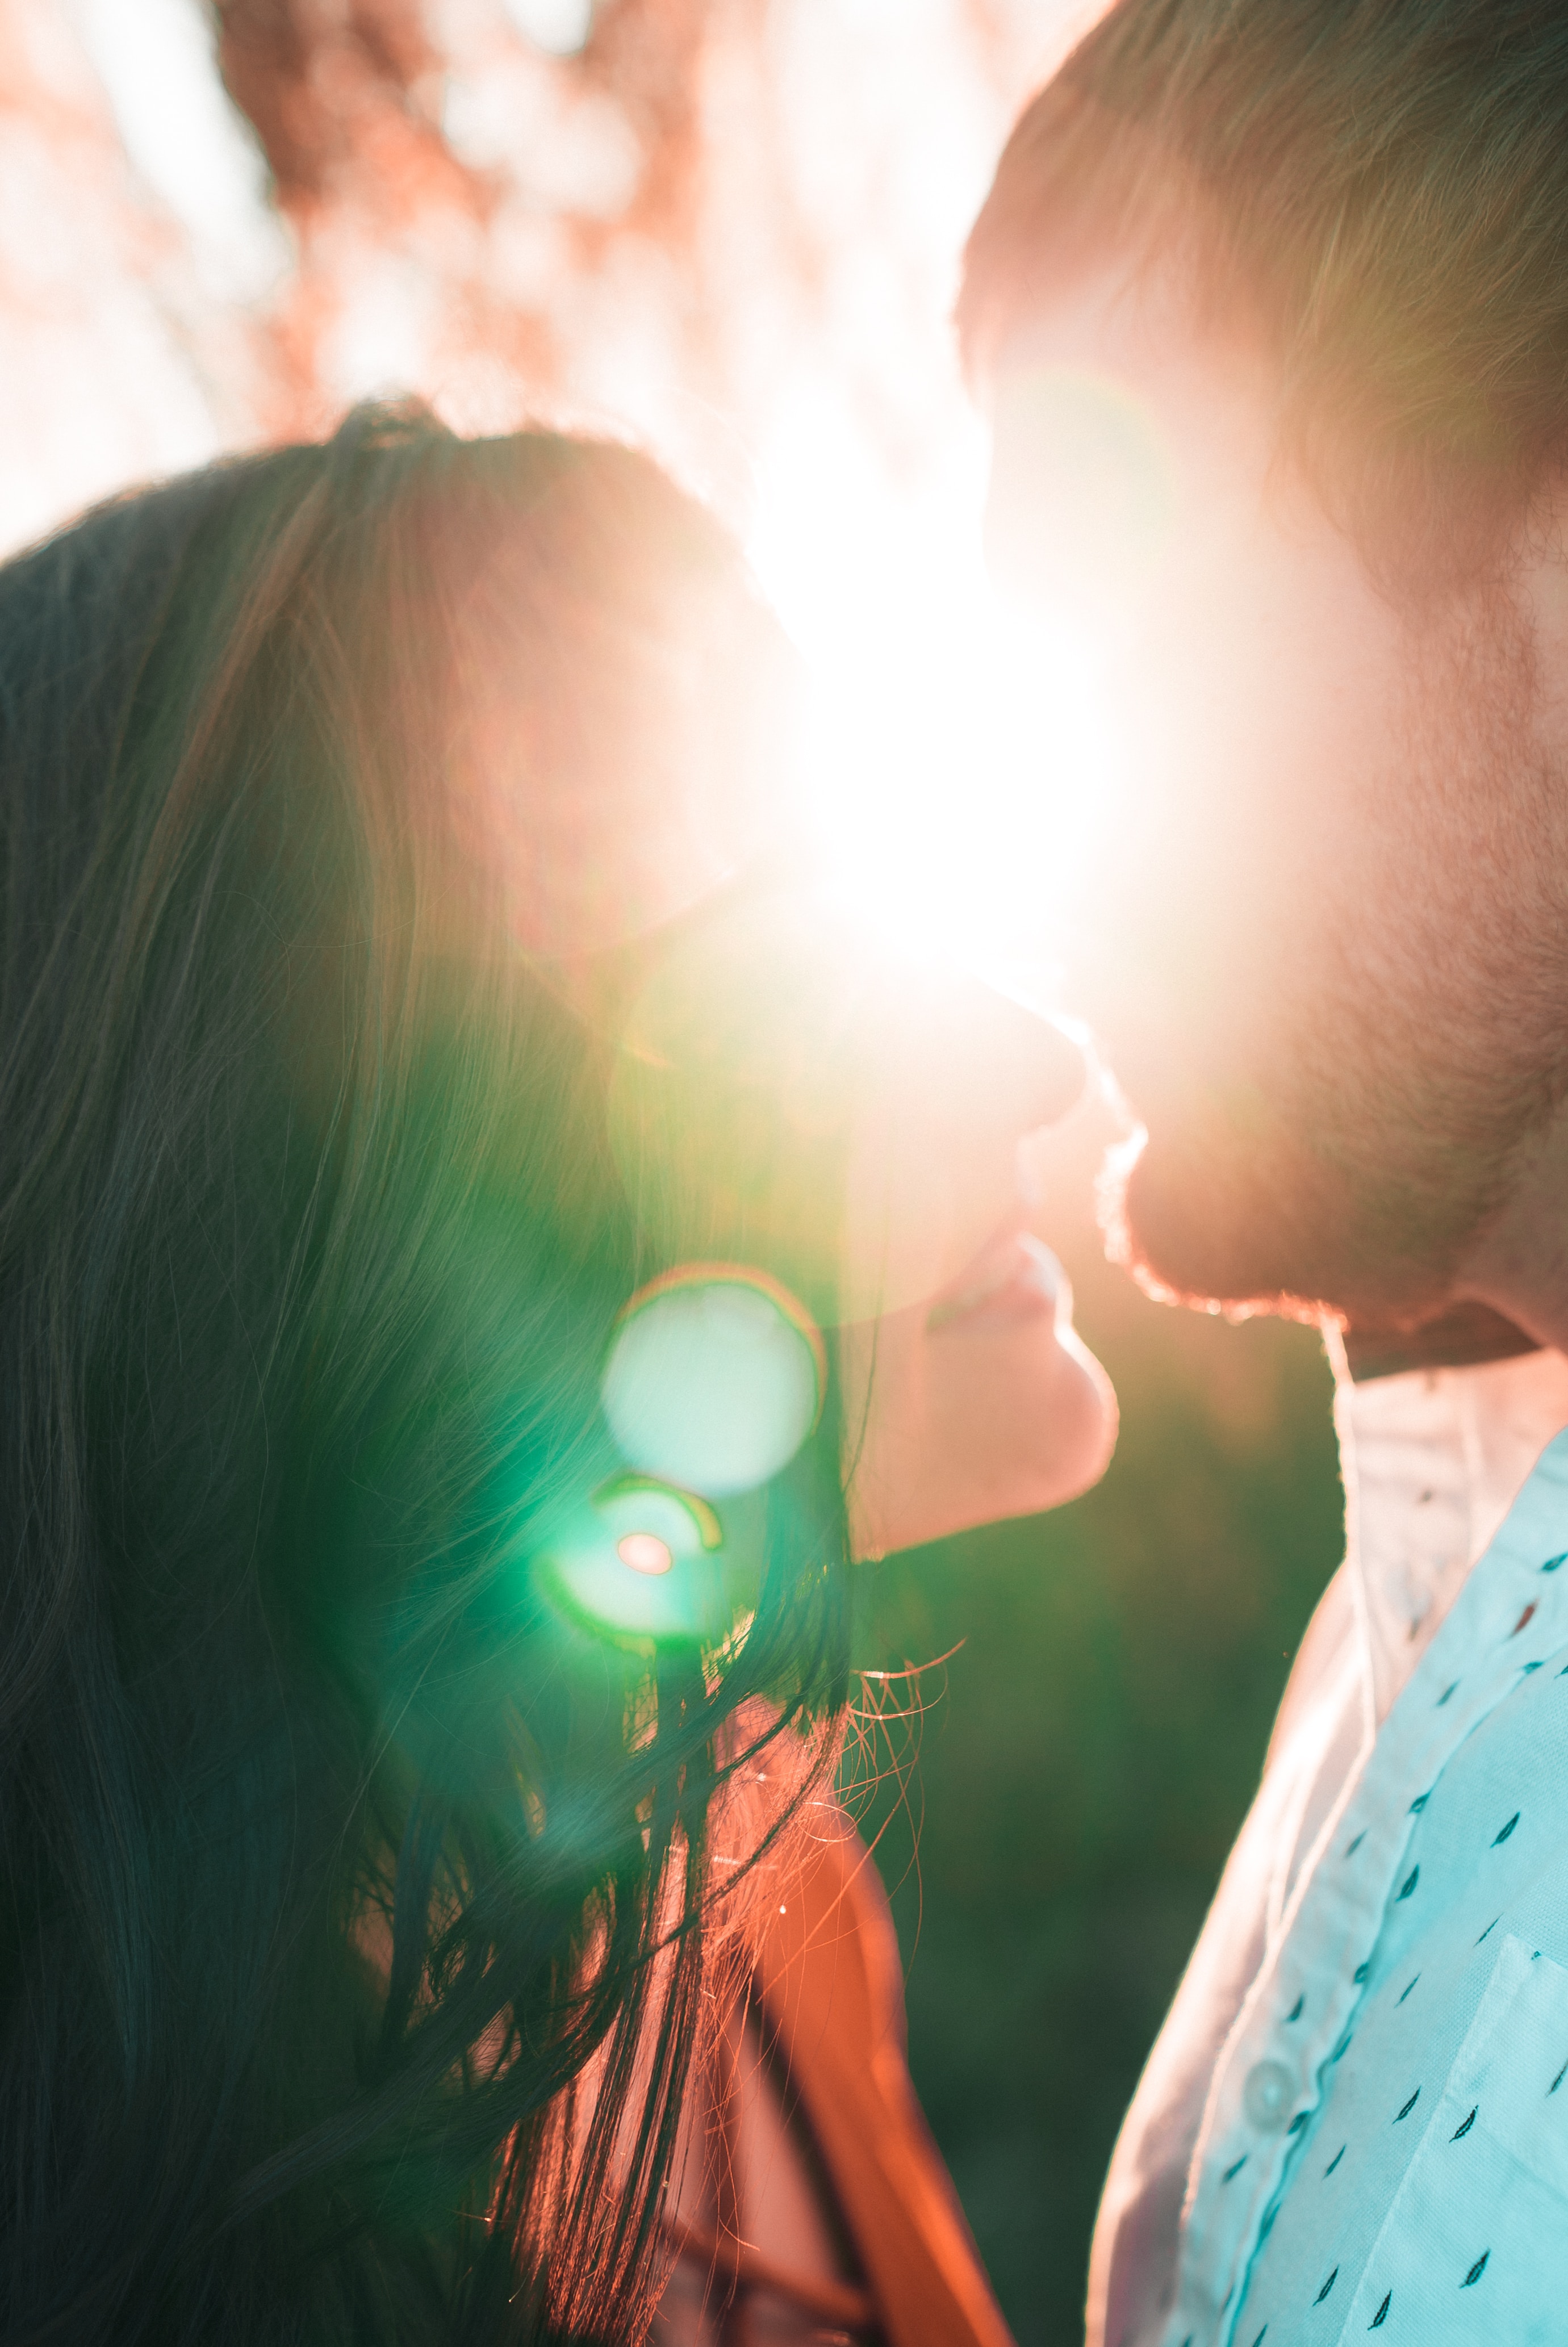 Couple kissing during golden hour. | Source: Unsplash